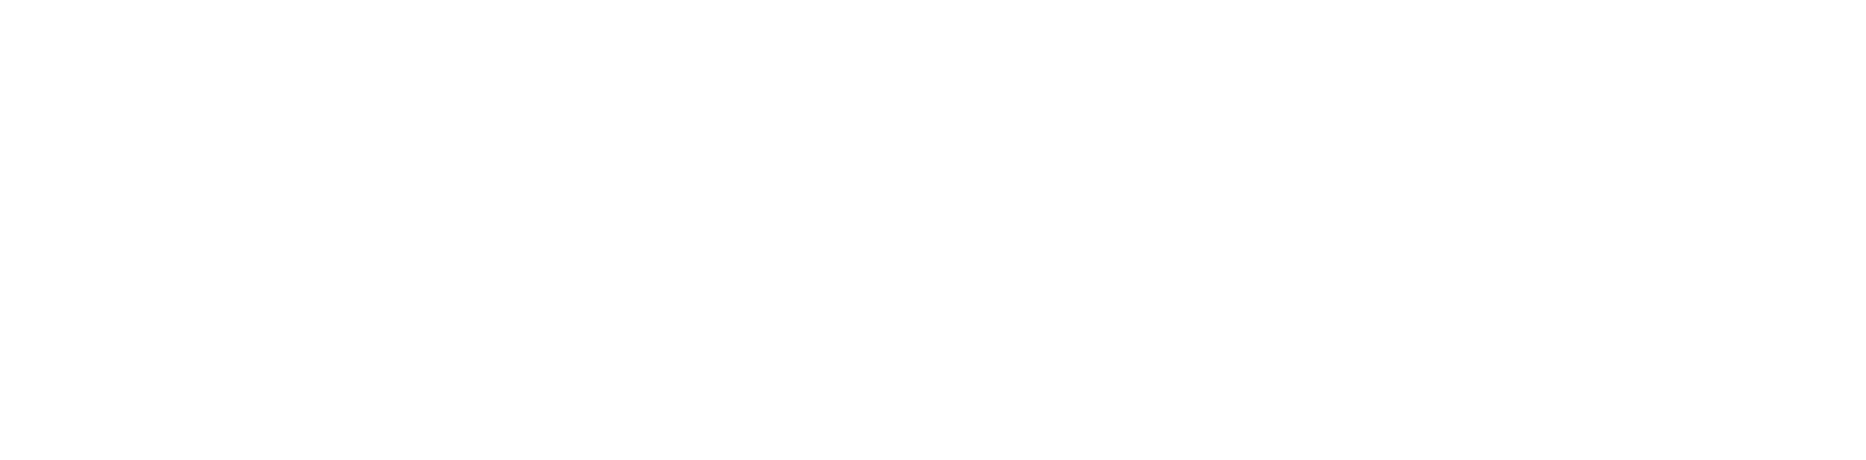 Autotrasporti Fratelli Furlan - Logo white